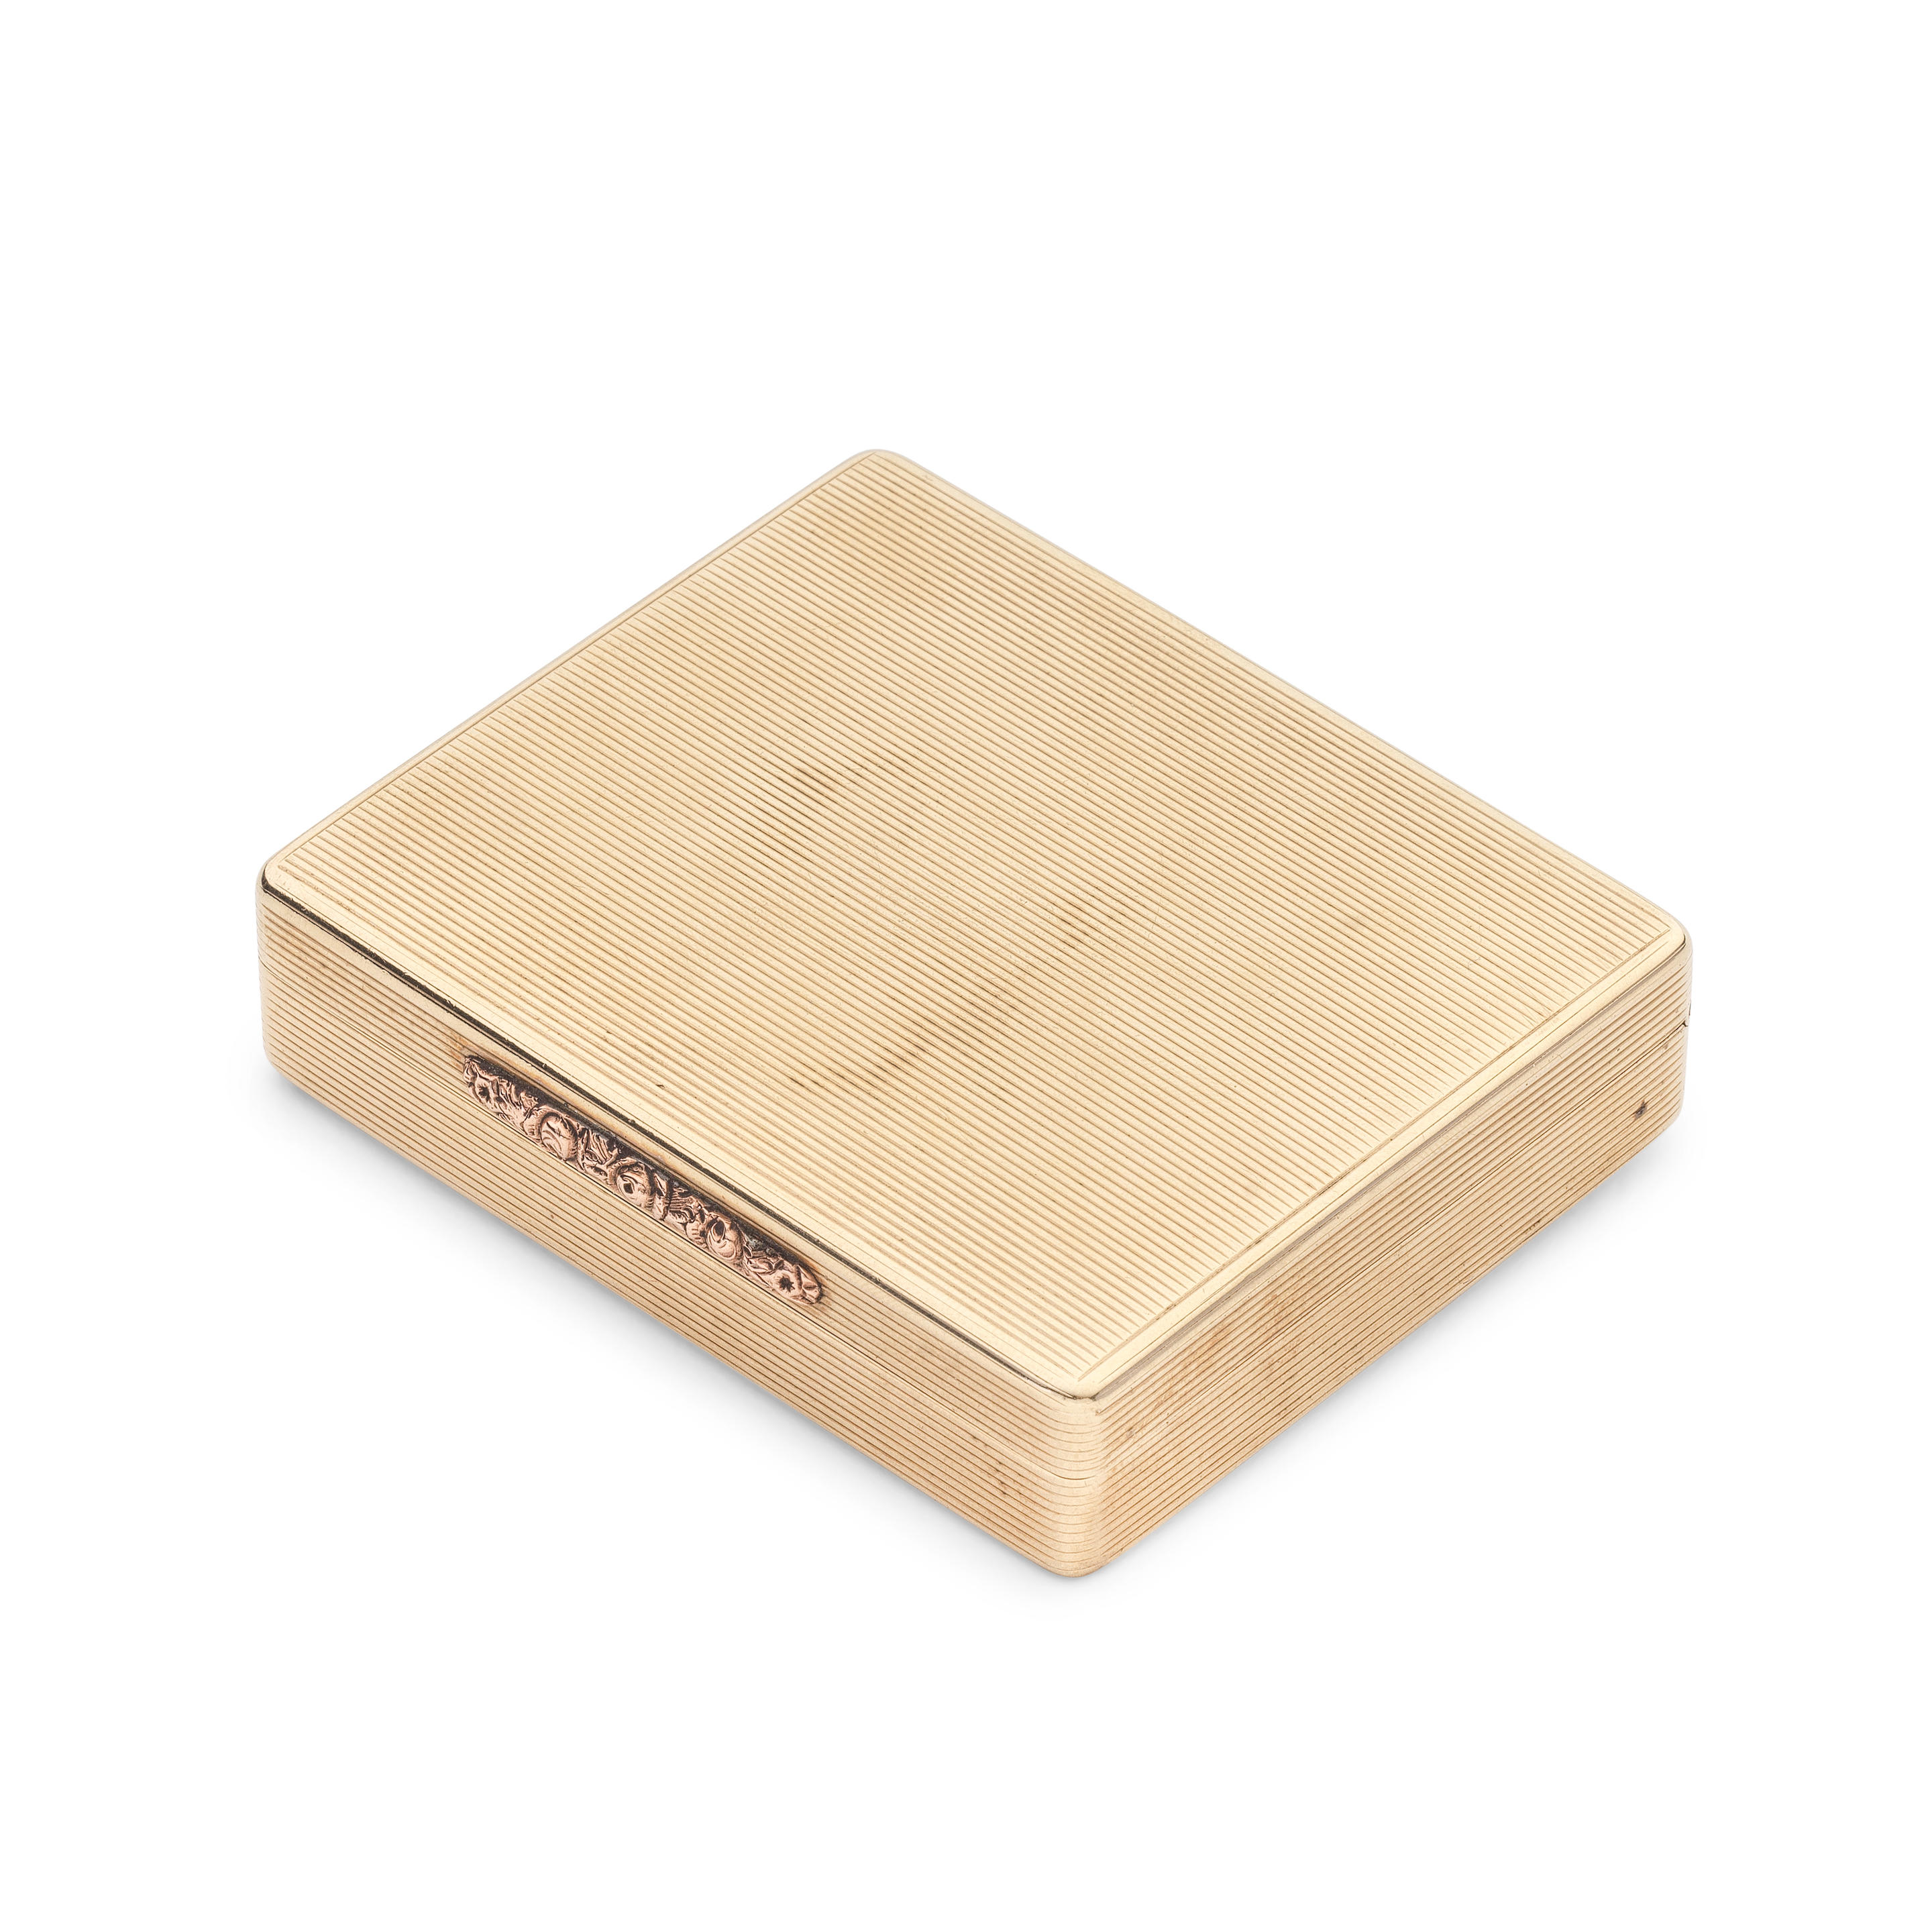 ROYAL INTEREST: a 9 carat gold snuff box